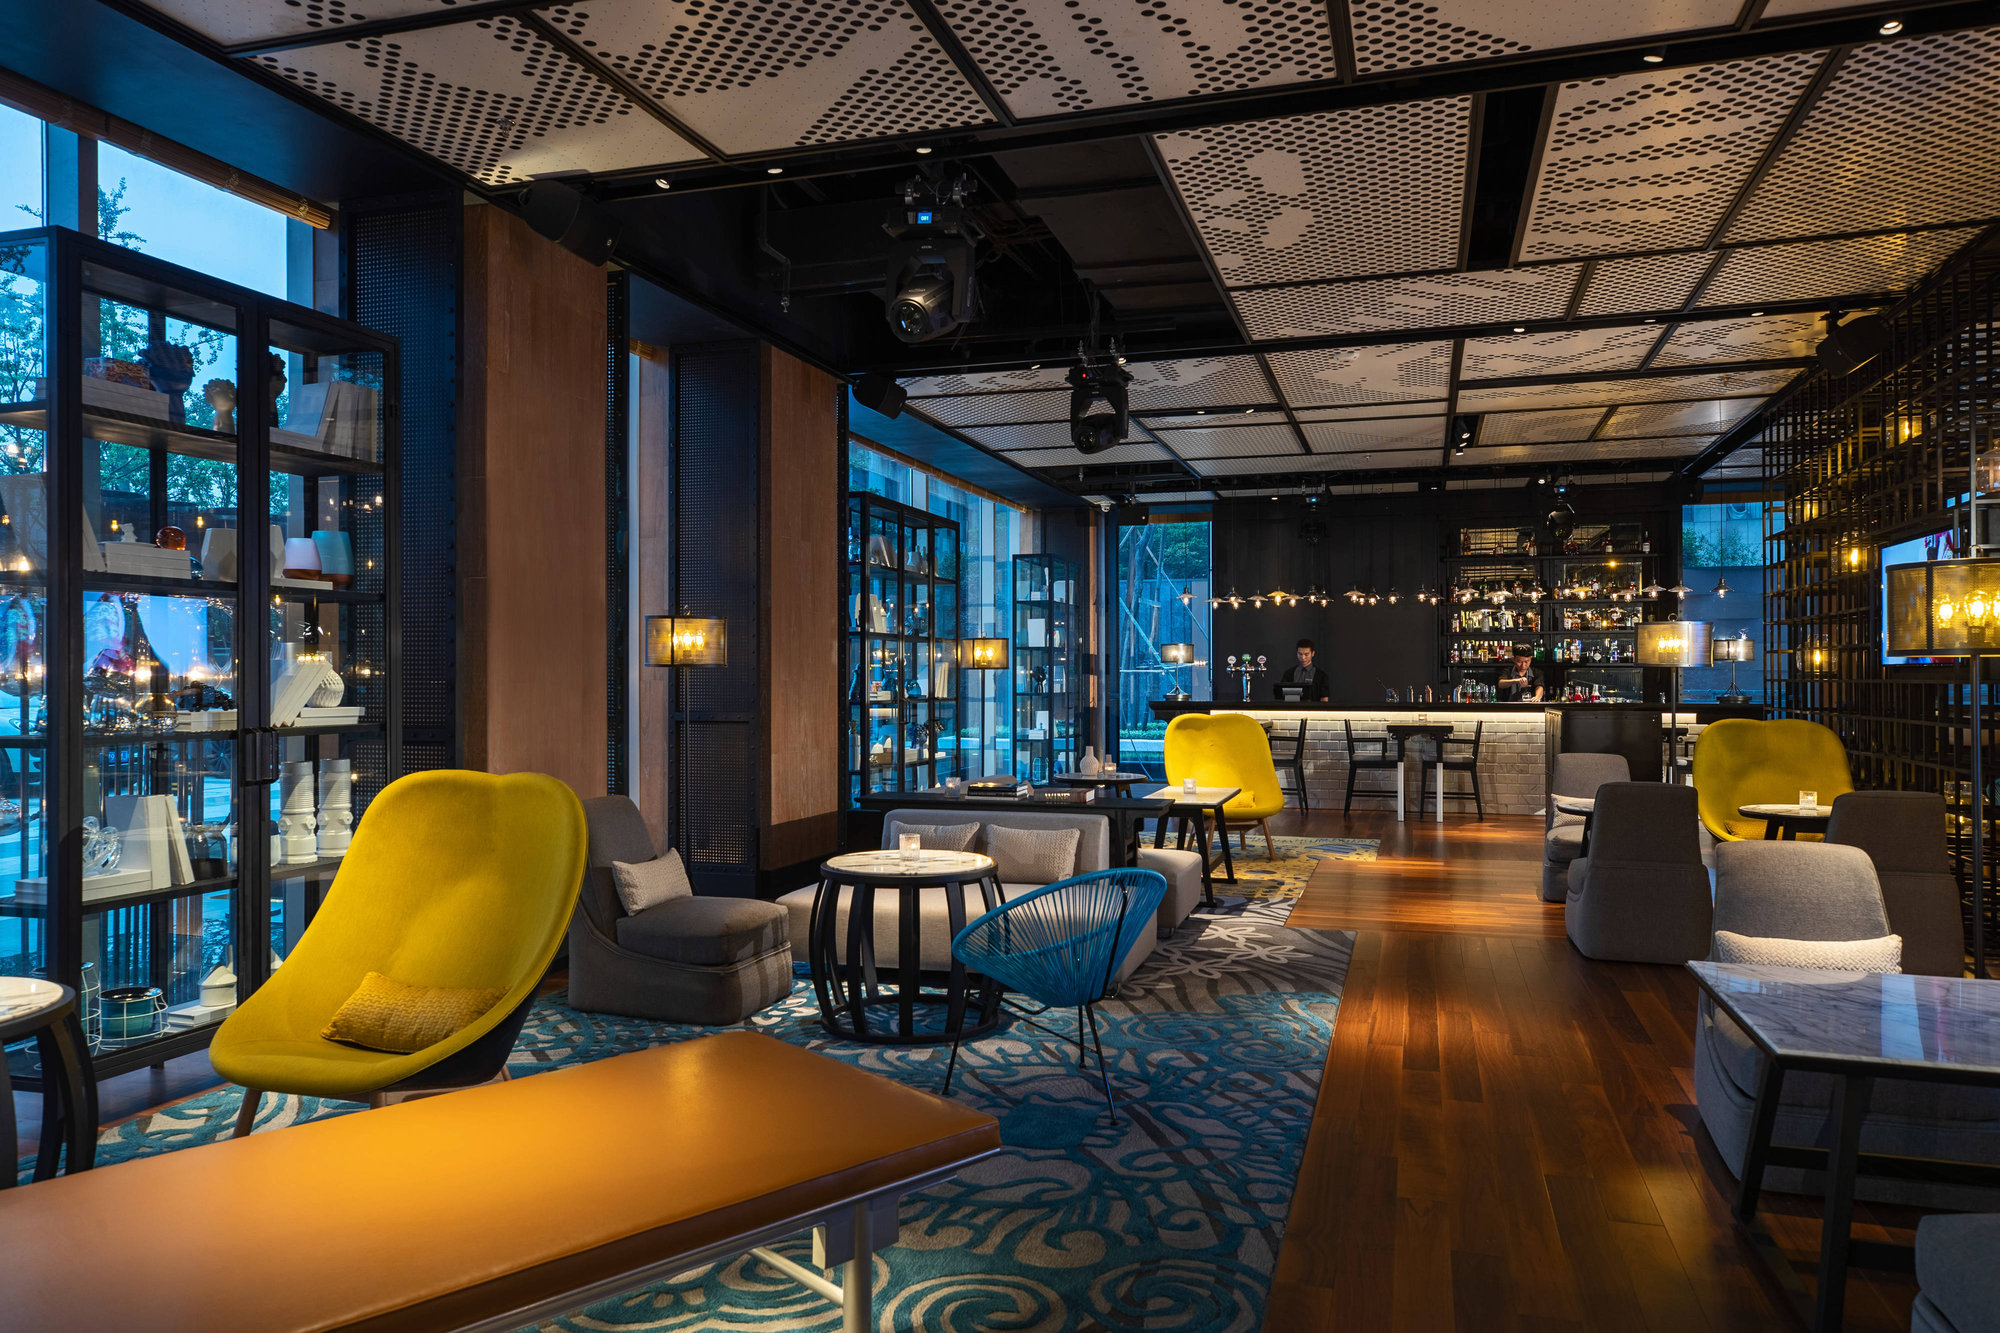 Design of Trendy Theme Hotel Bar